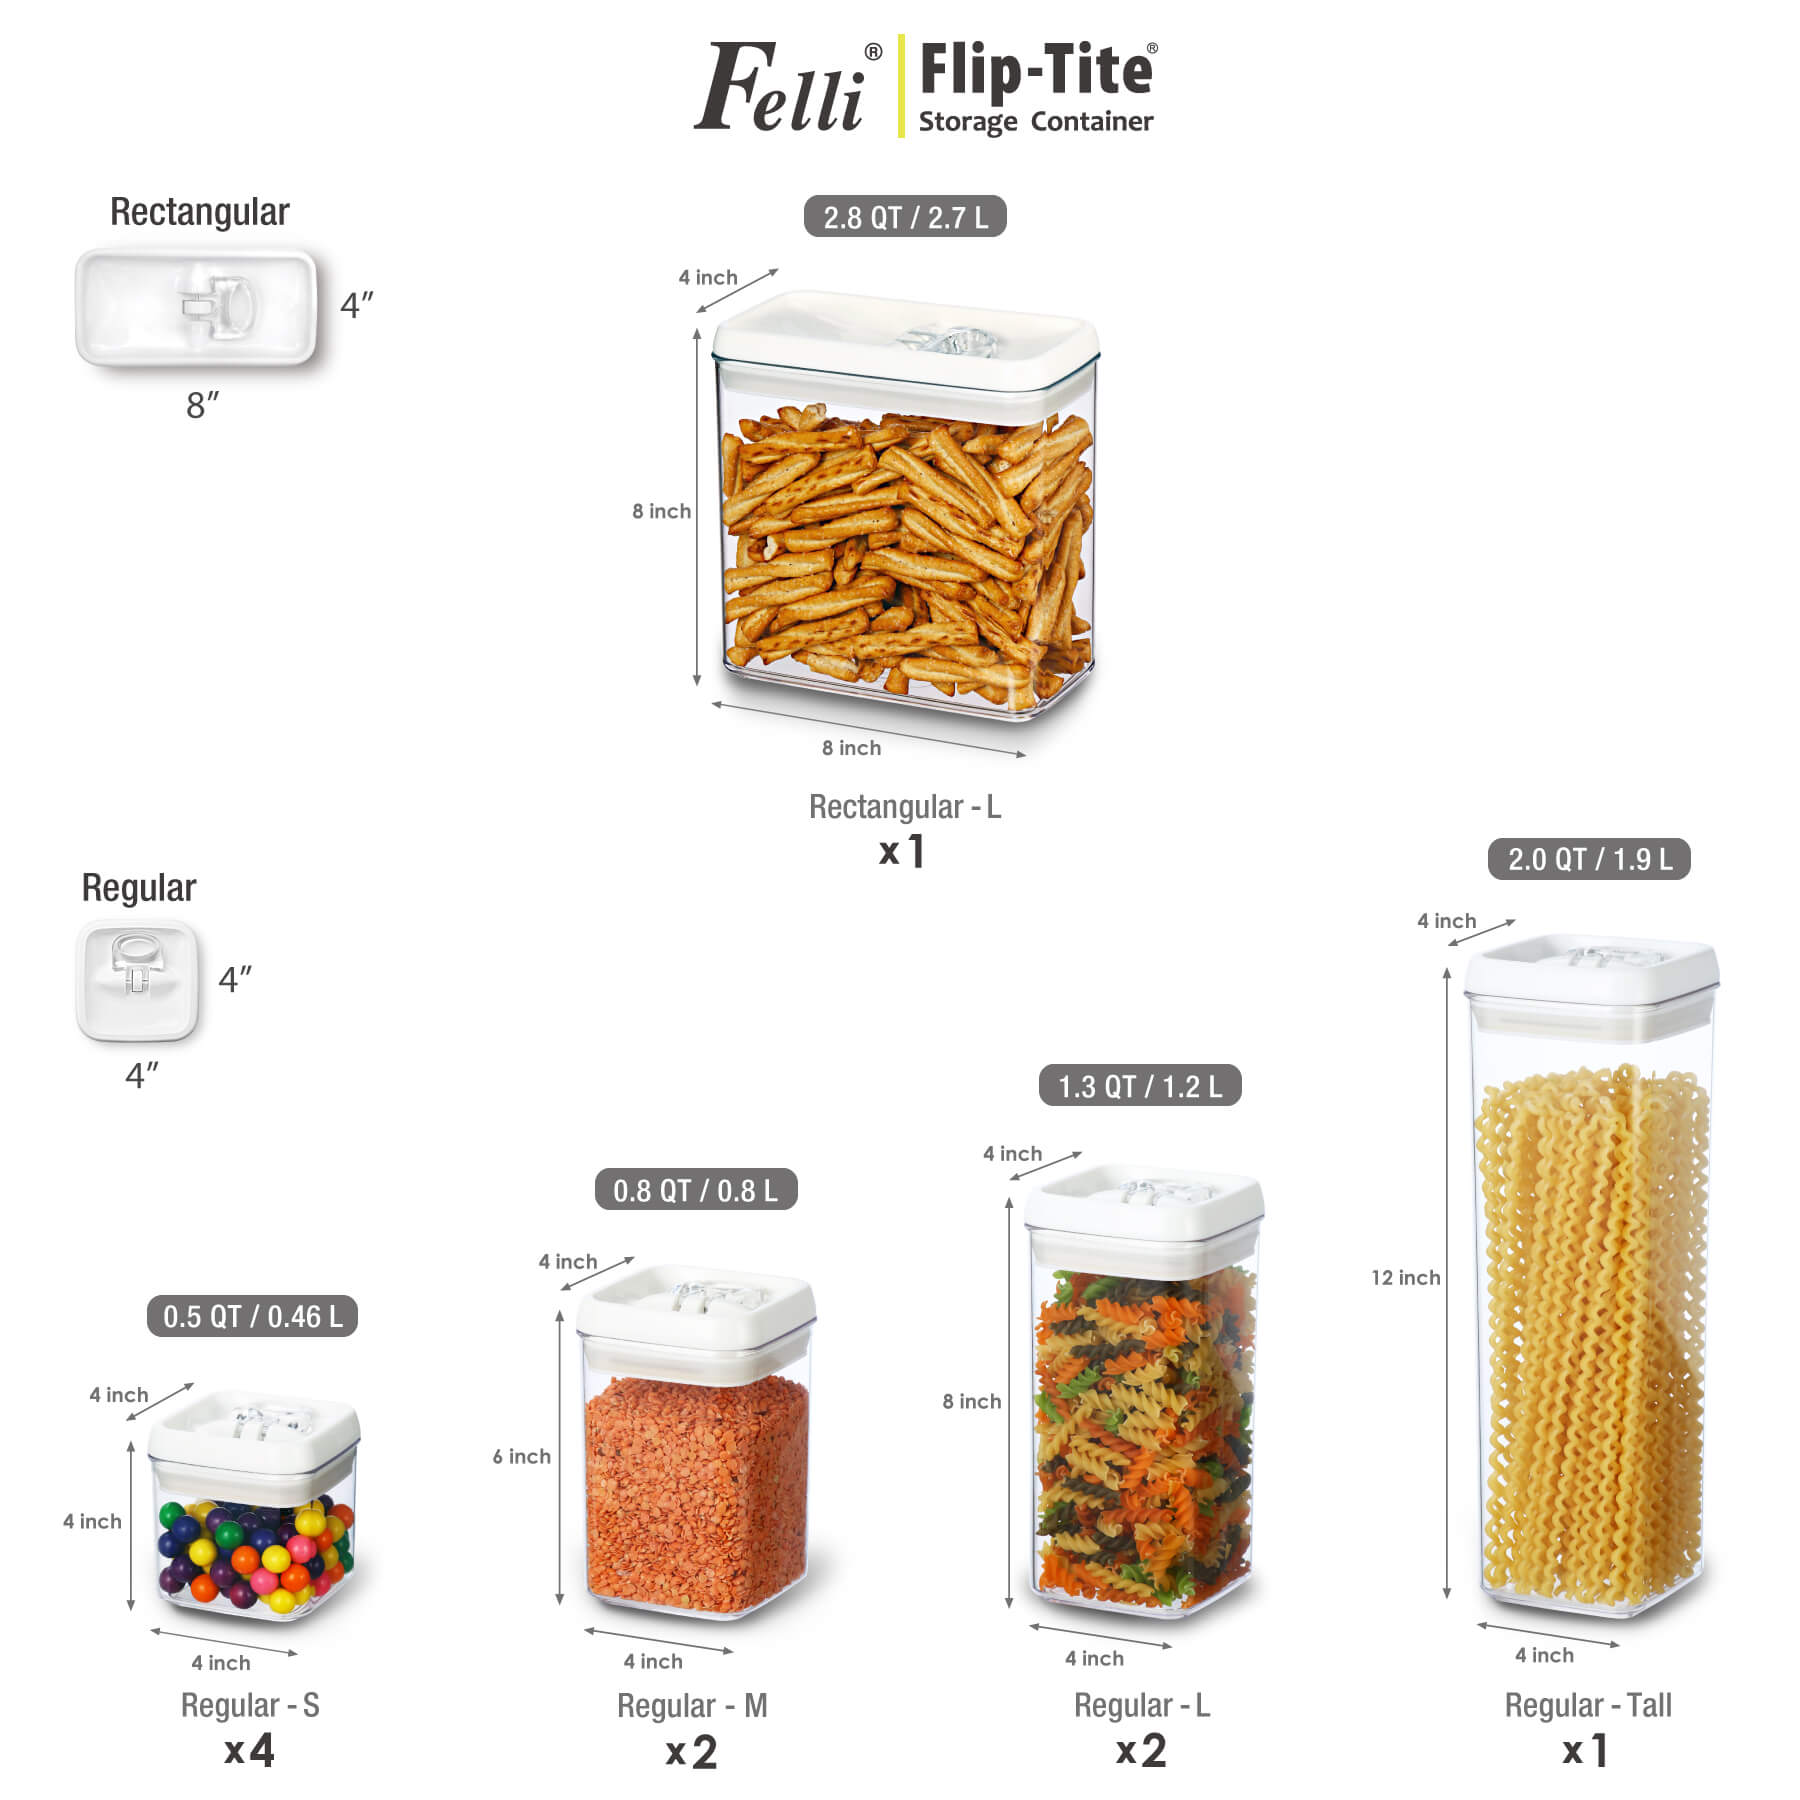 Felli Flip Tite Acrylic Storage Container Rectangular 4pk Variety Set